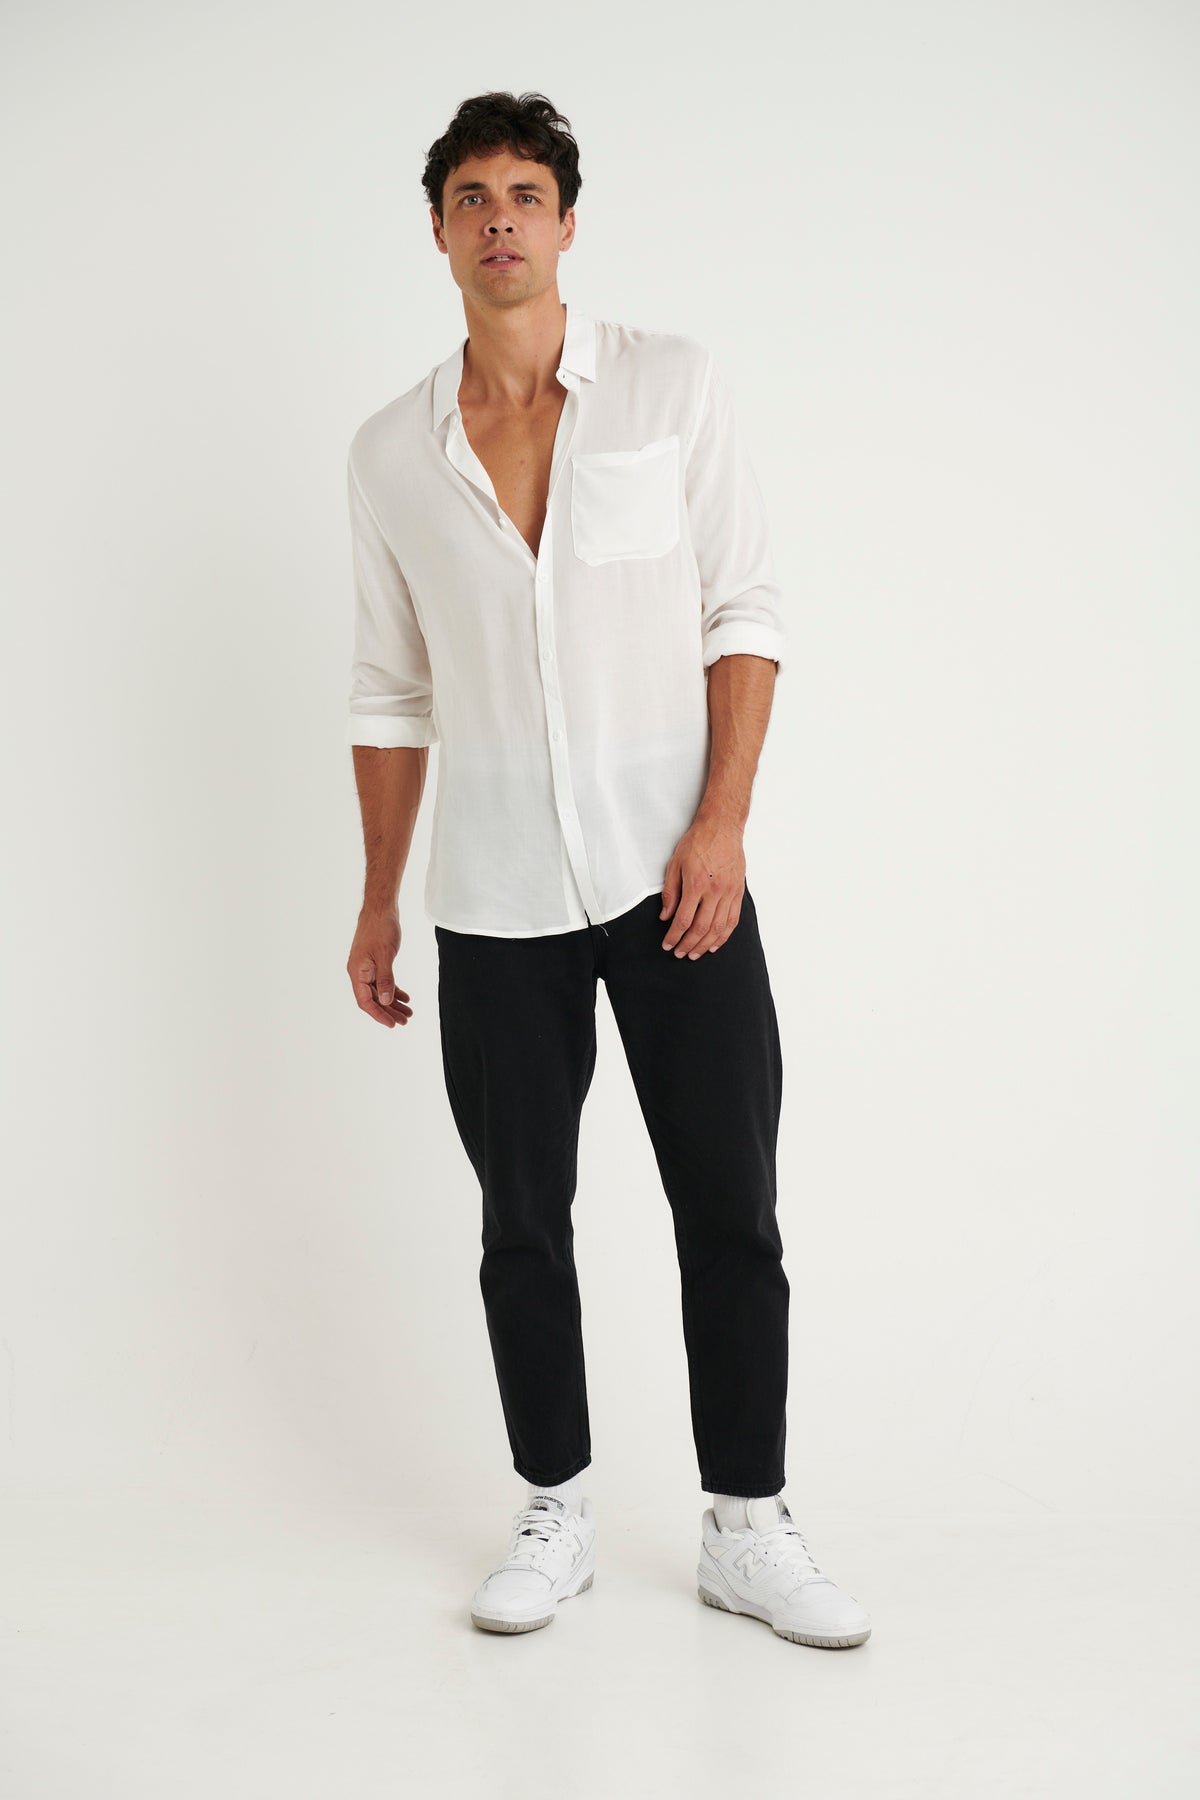 NTH Rayon Long Sleeve Shirt White - FINAL SALE